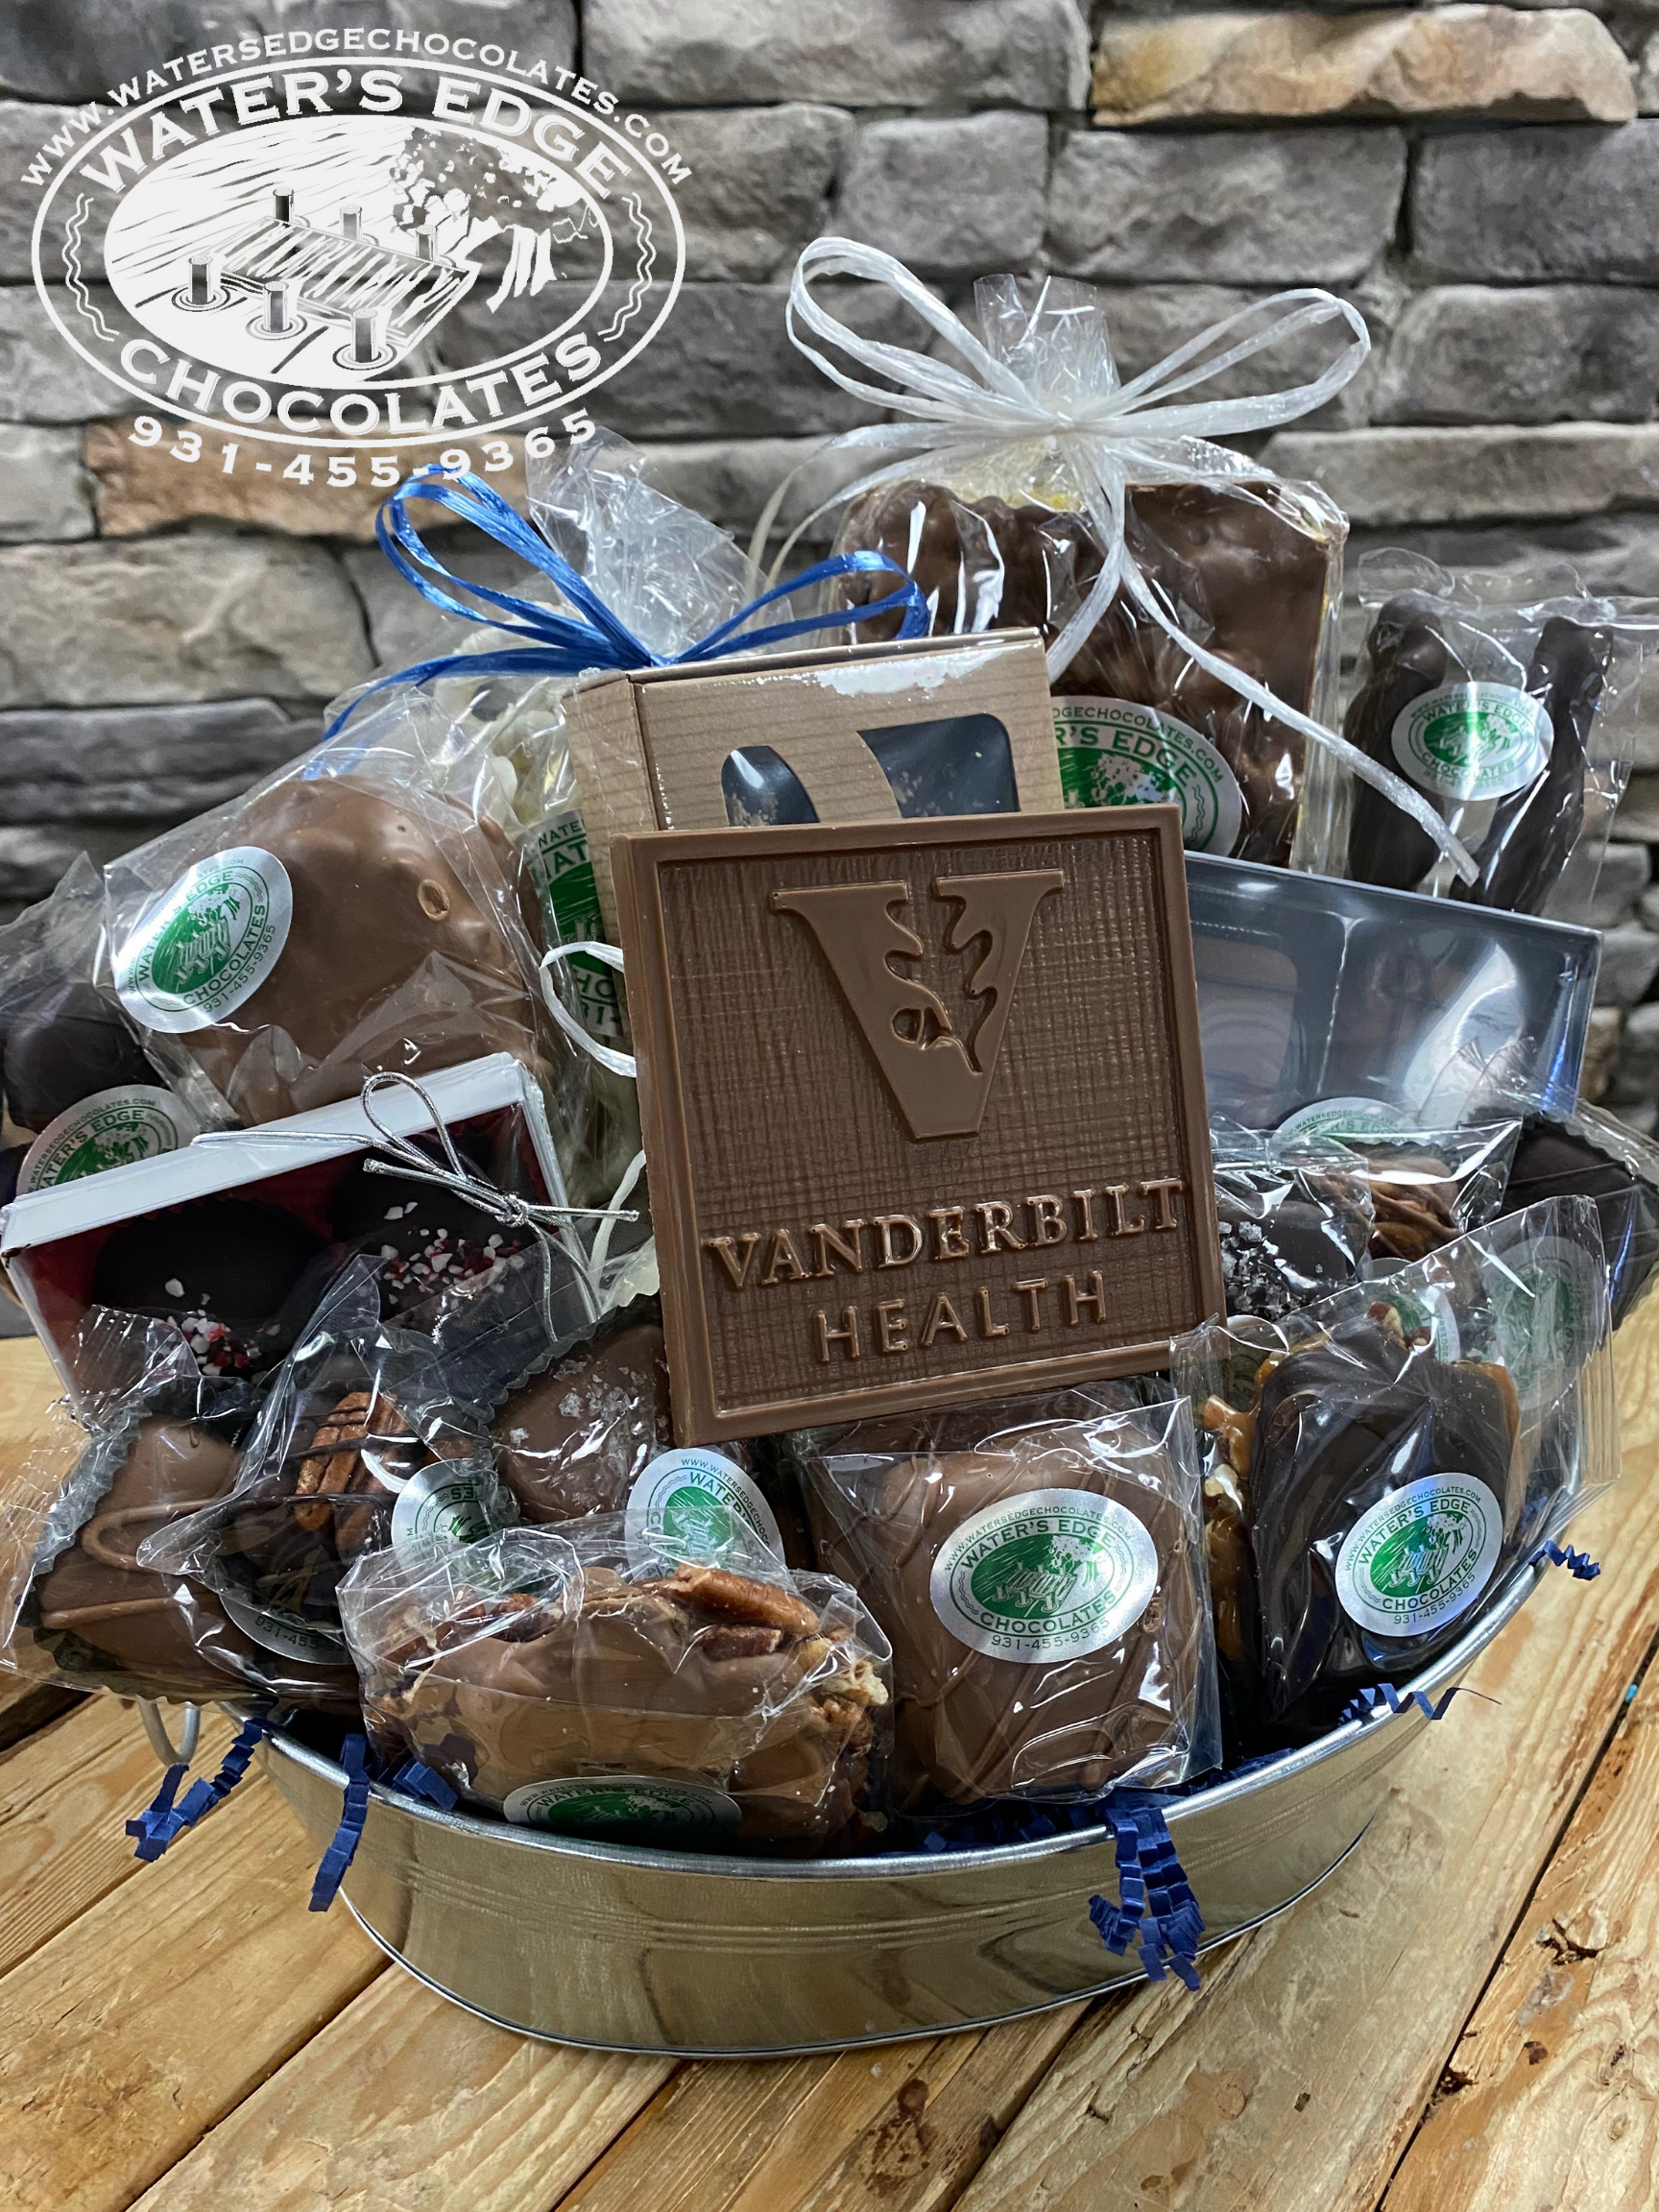 Vanderbilt $125 Chocolate Gift Basketk